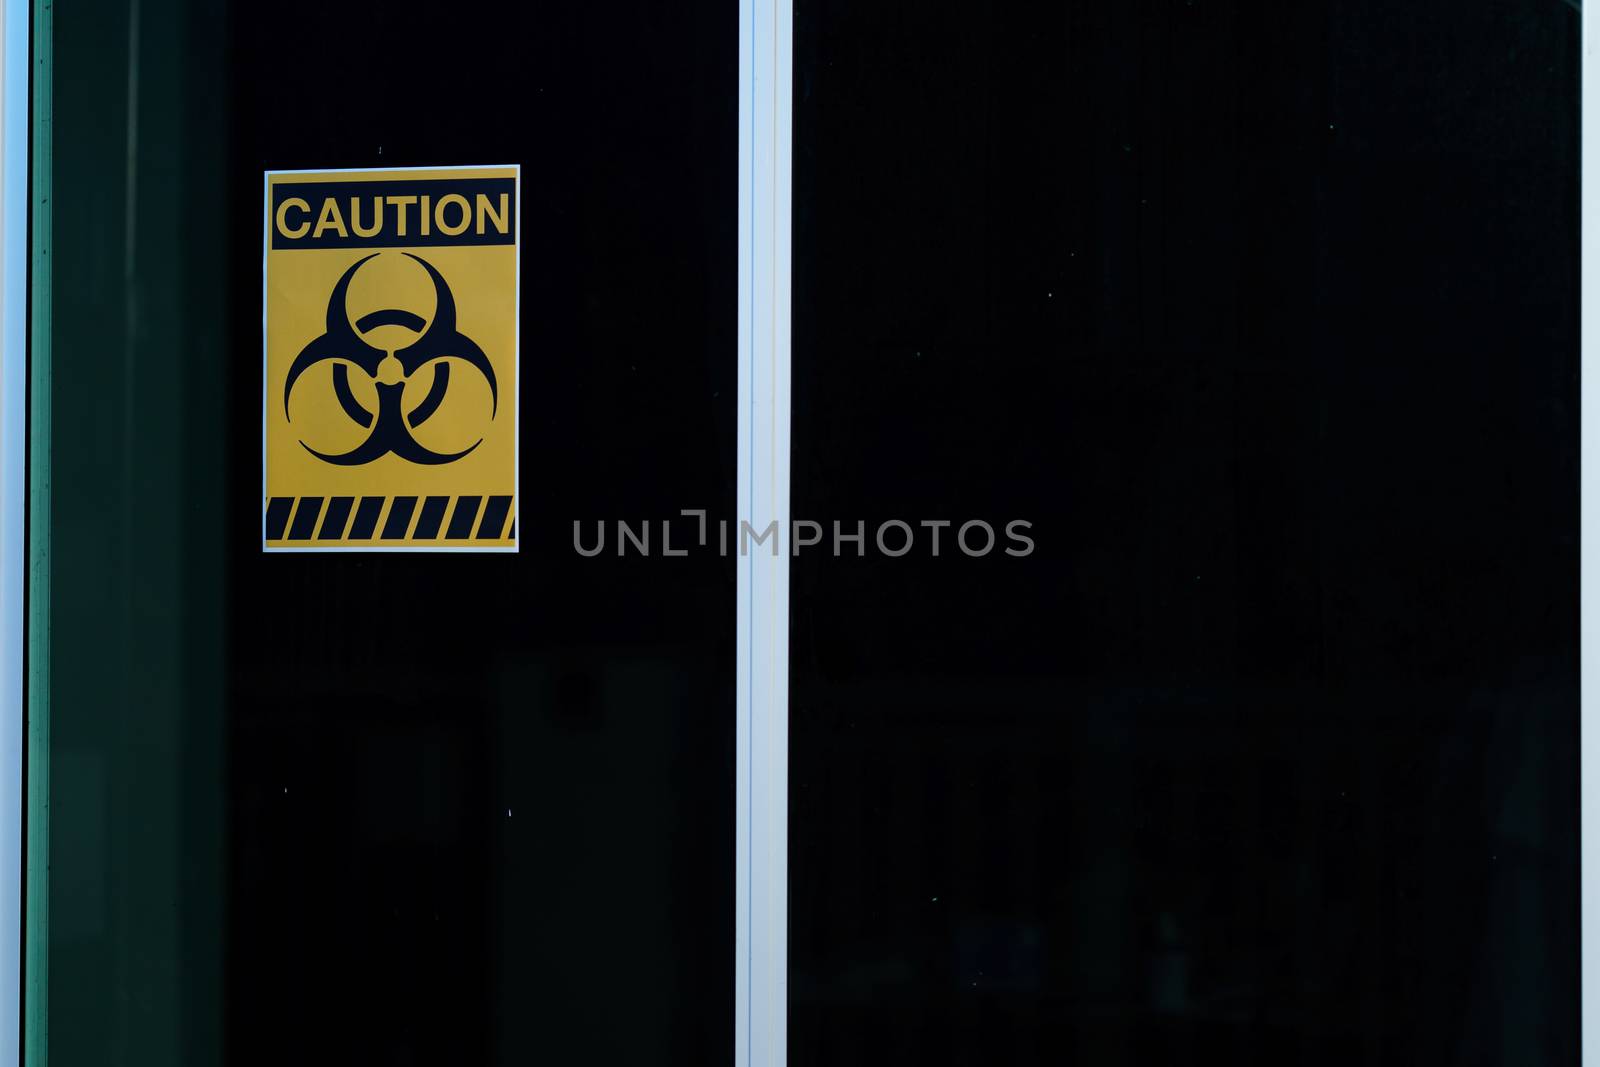 Caution danger sign. Hazard warning signs on glass window in laboratory.